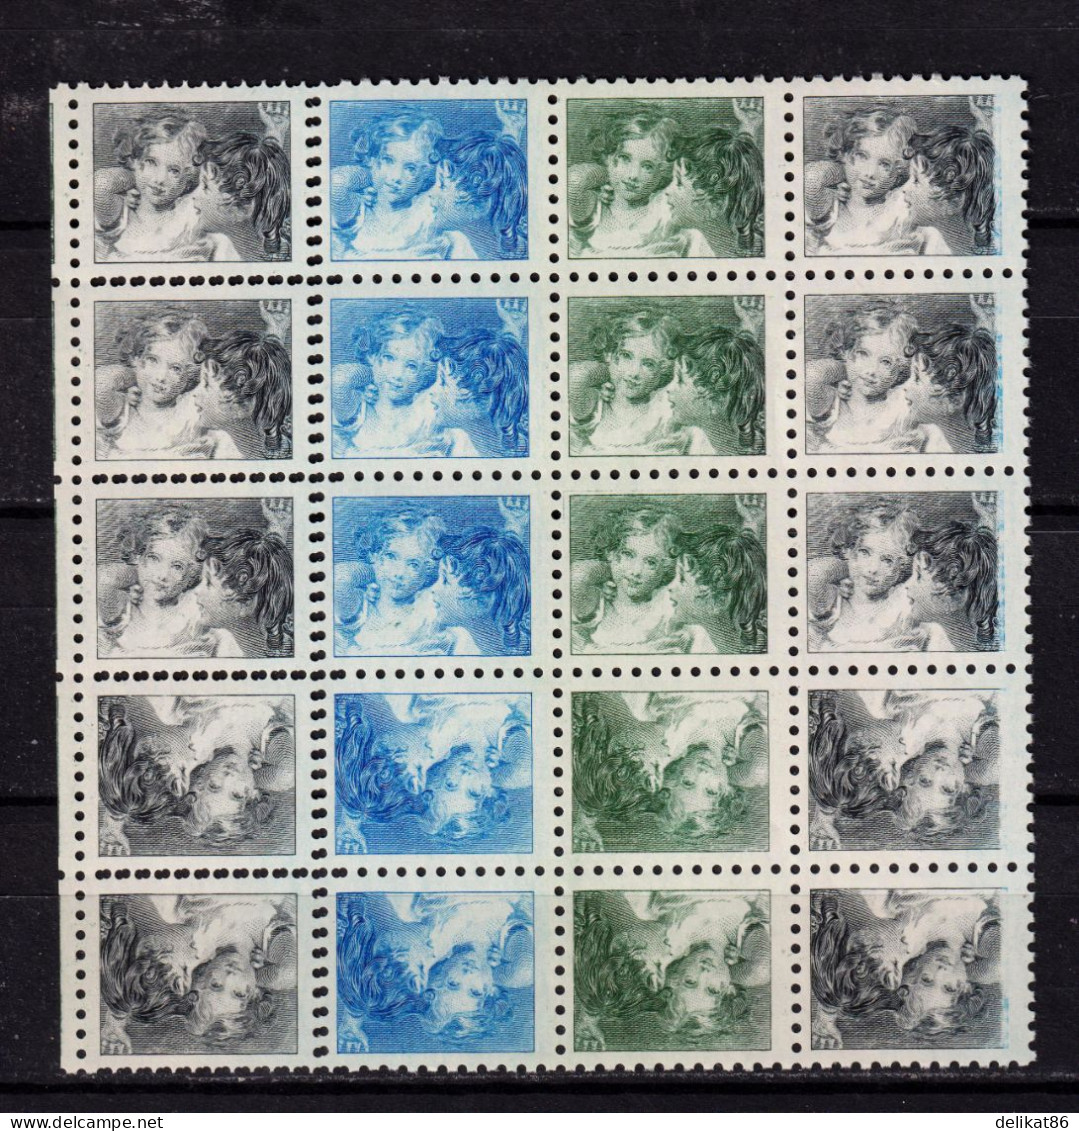 Probedruck Test Stamp Maschinprobe Specimen Canada 1935 Baby Sister - Prove & Ristampe